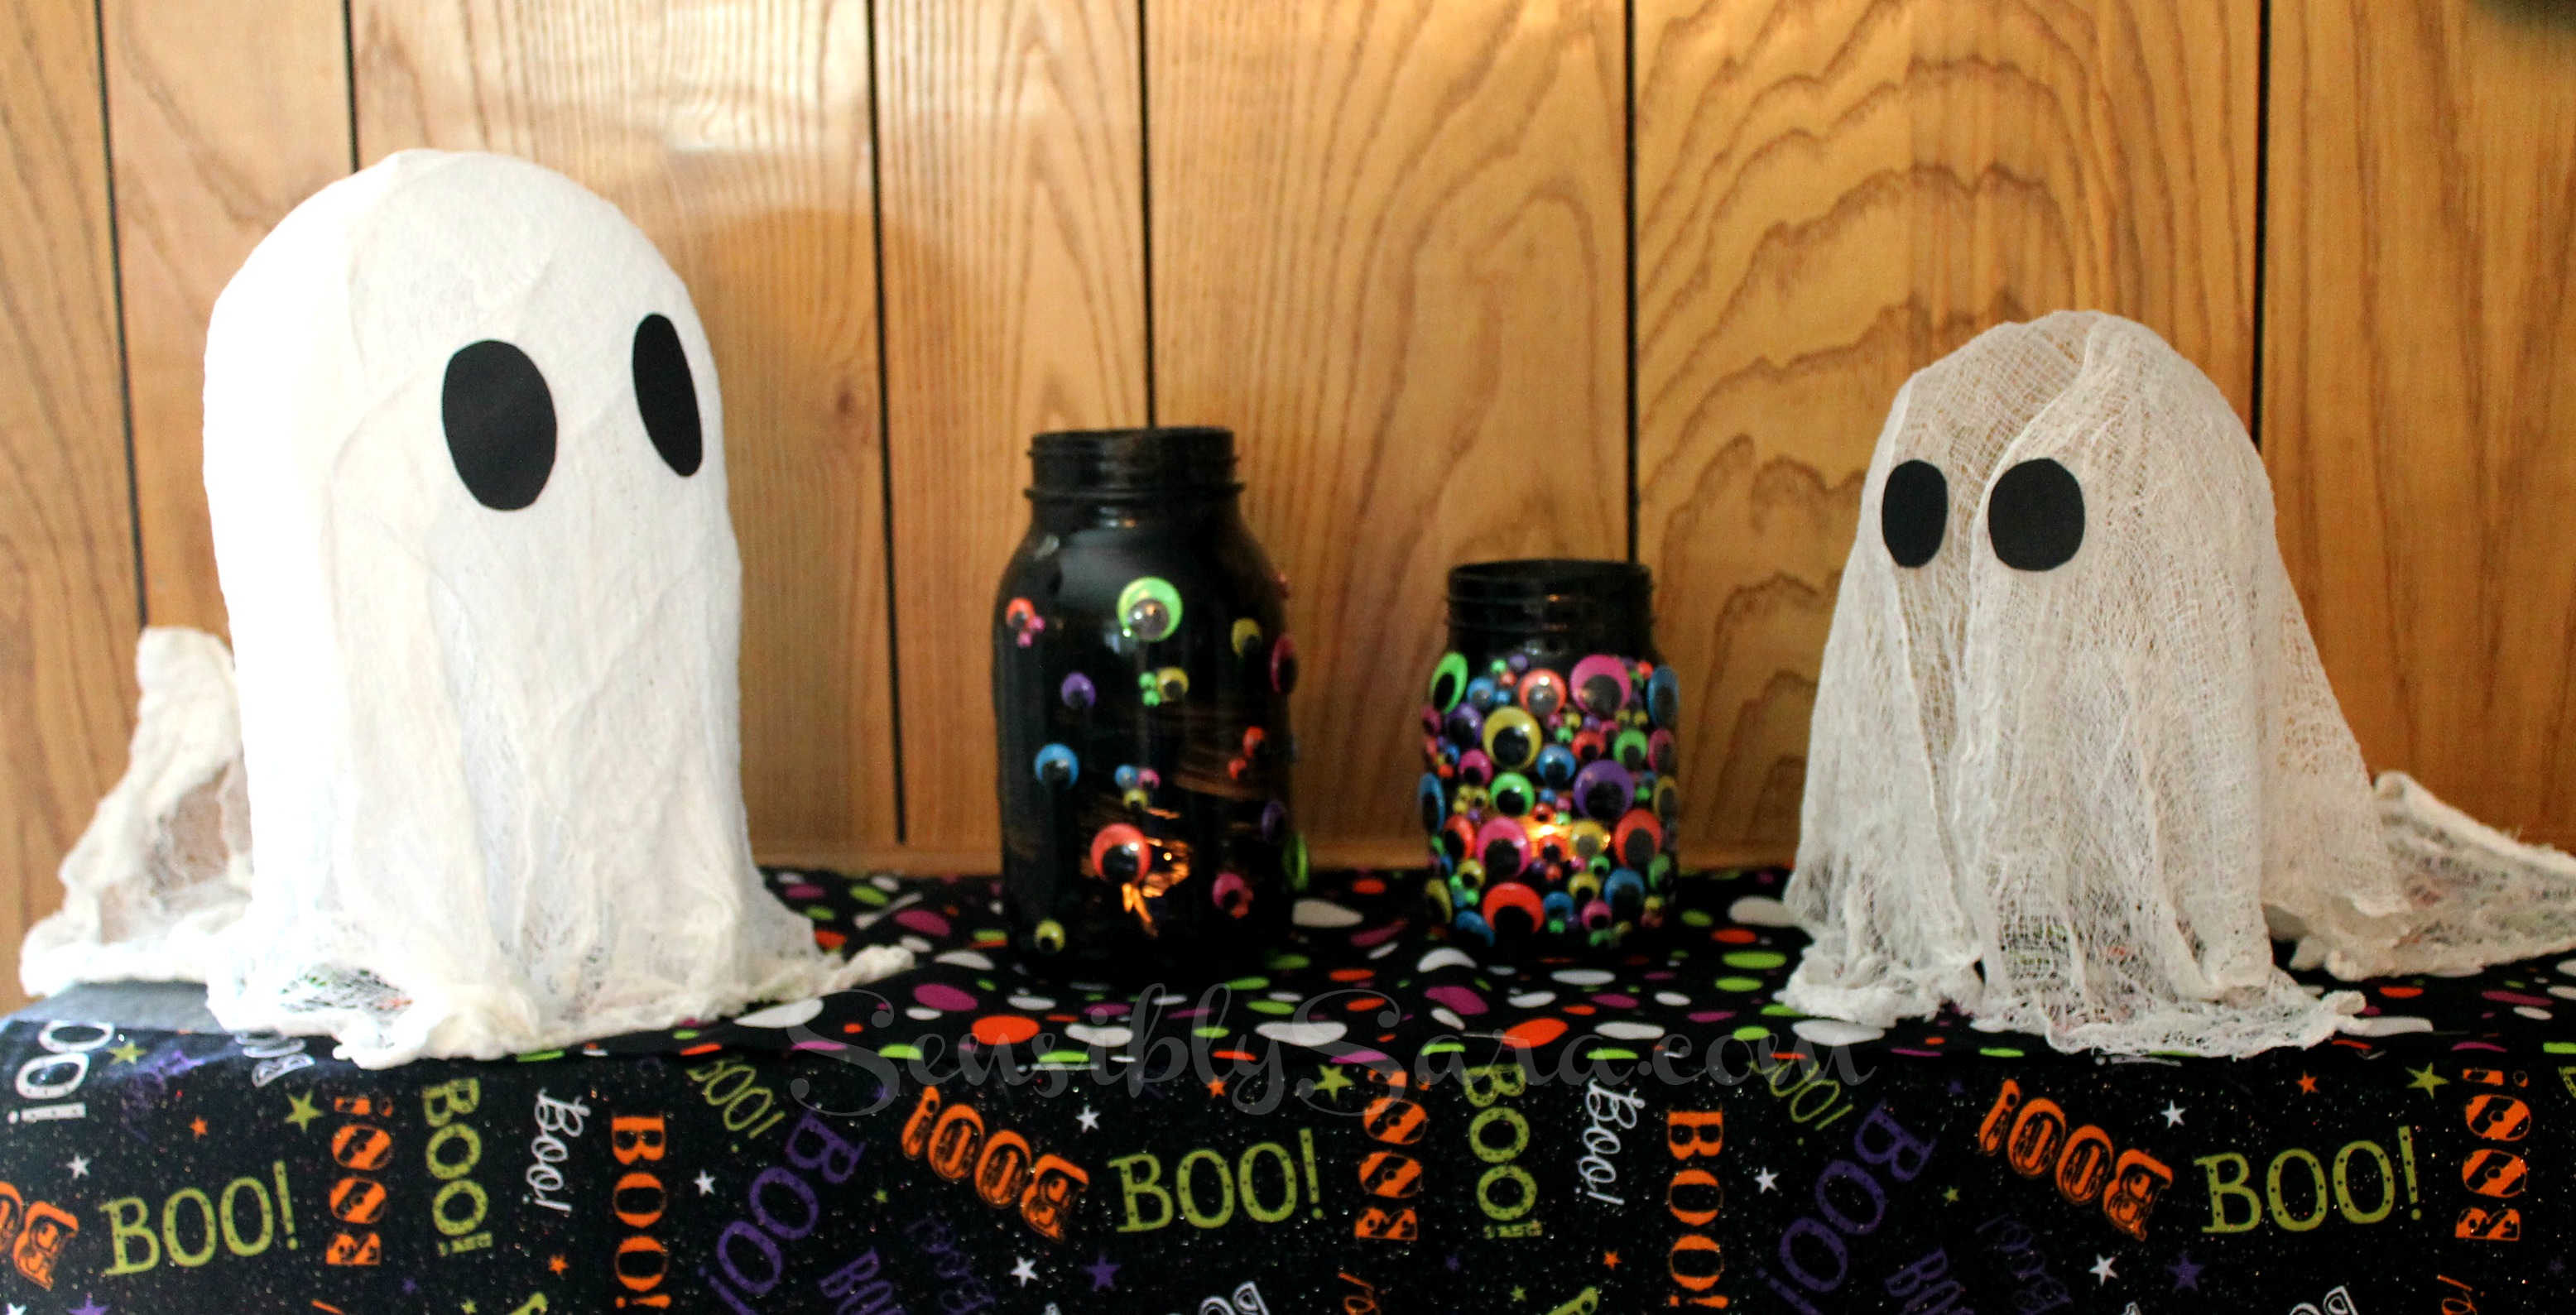 2 Halloween crafts that create #SpookySpaces!